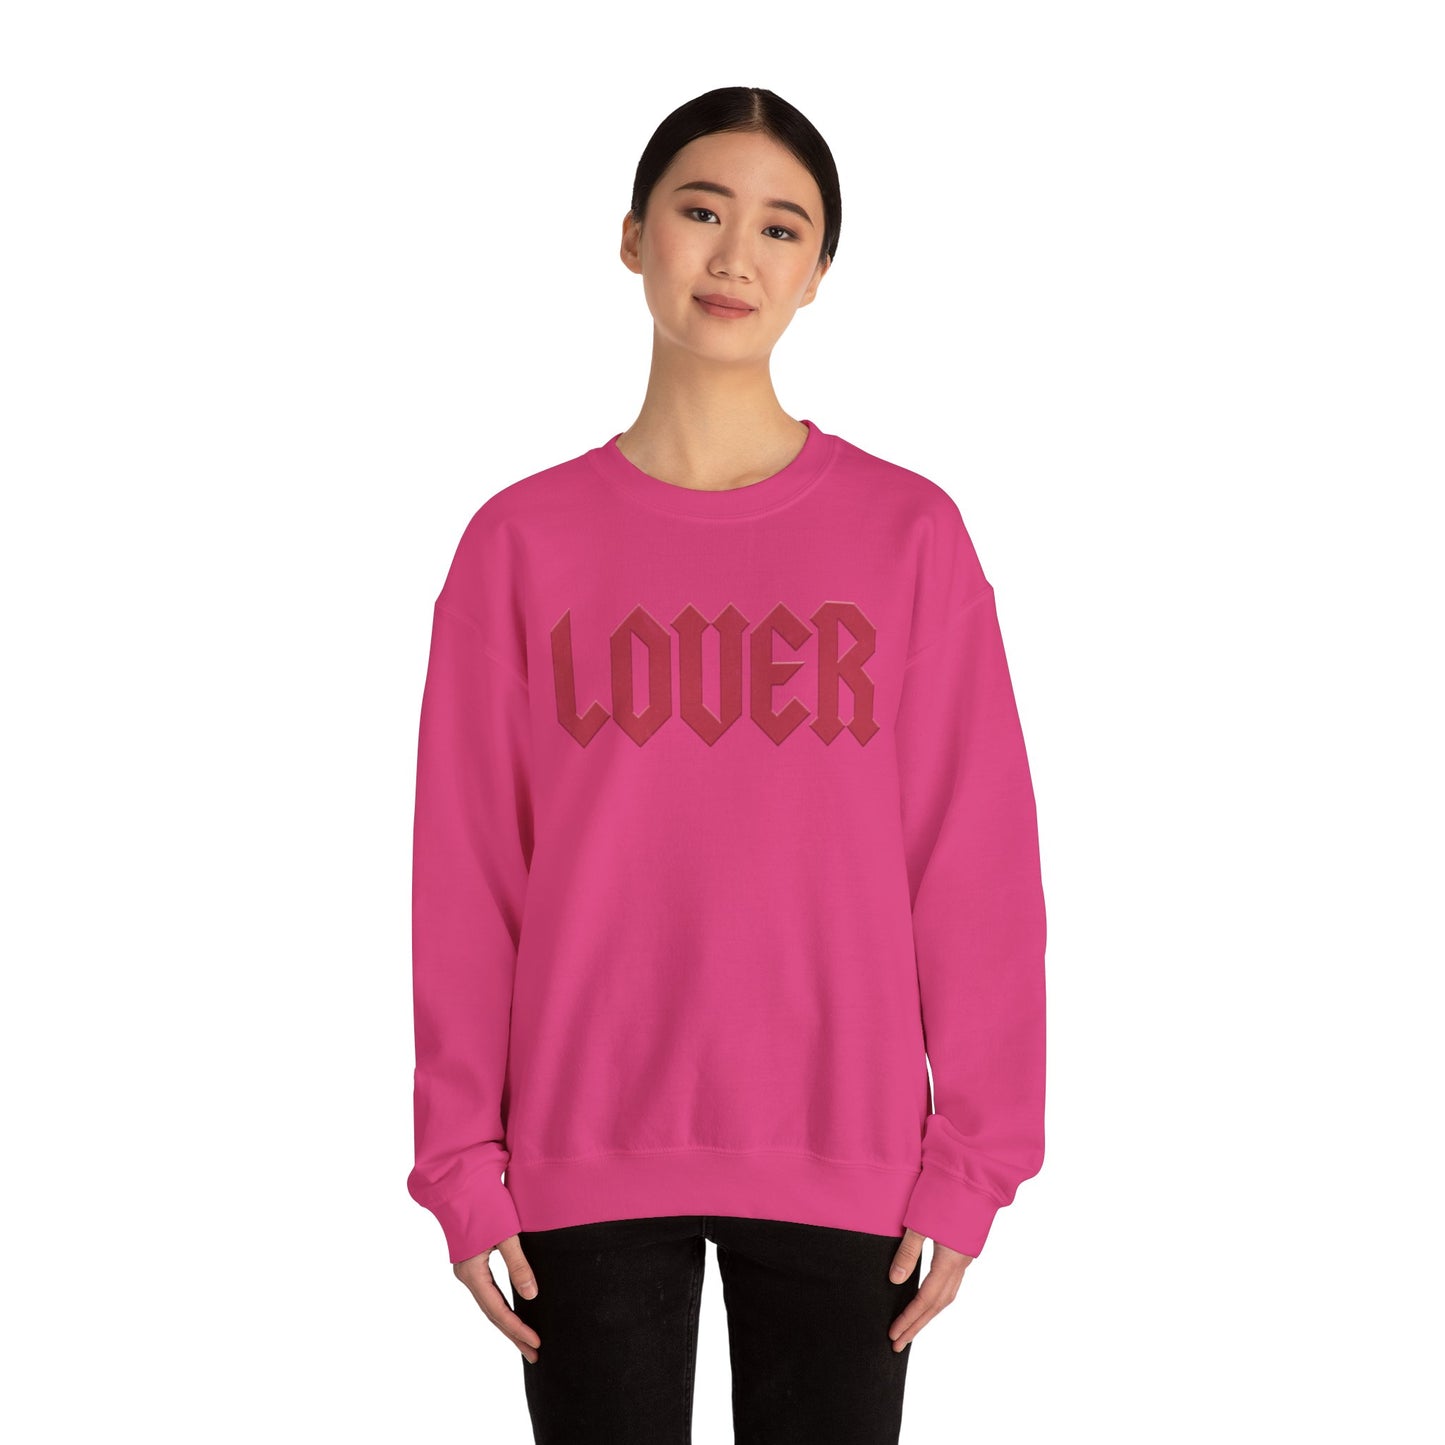 Retro Lover Sweatshirt, In My Valentine Era Sweatshirt, Happy Valentine's Day Sweatshirt, Gift for Girlfriend, Couple Sweatshirt, SW1309